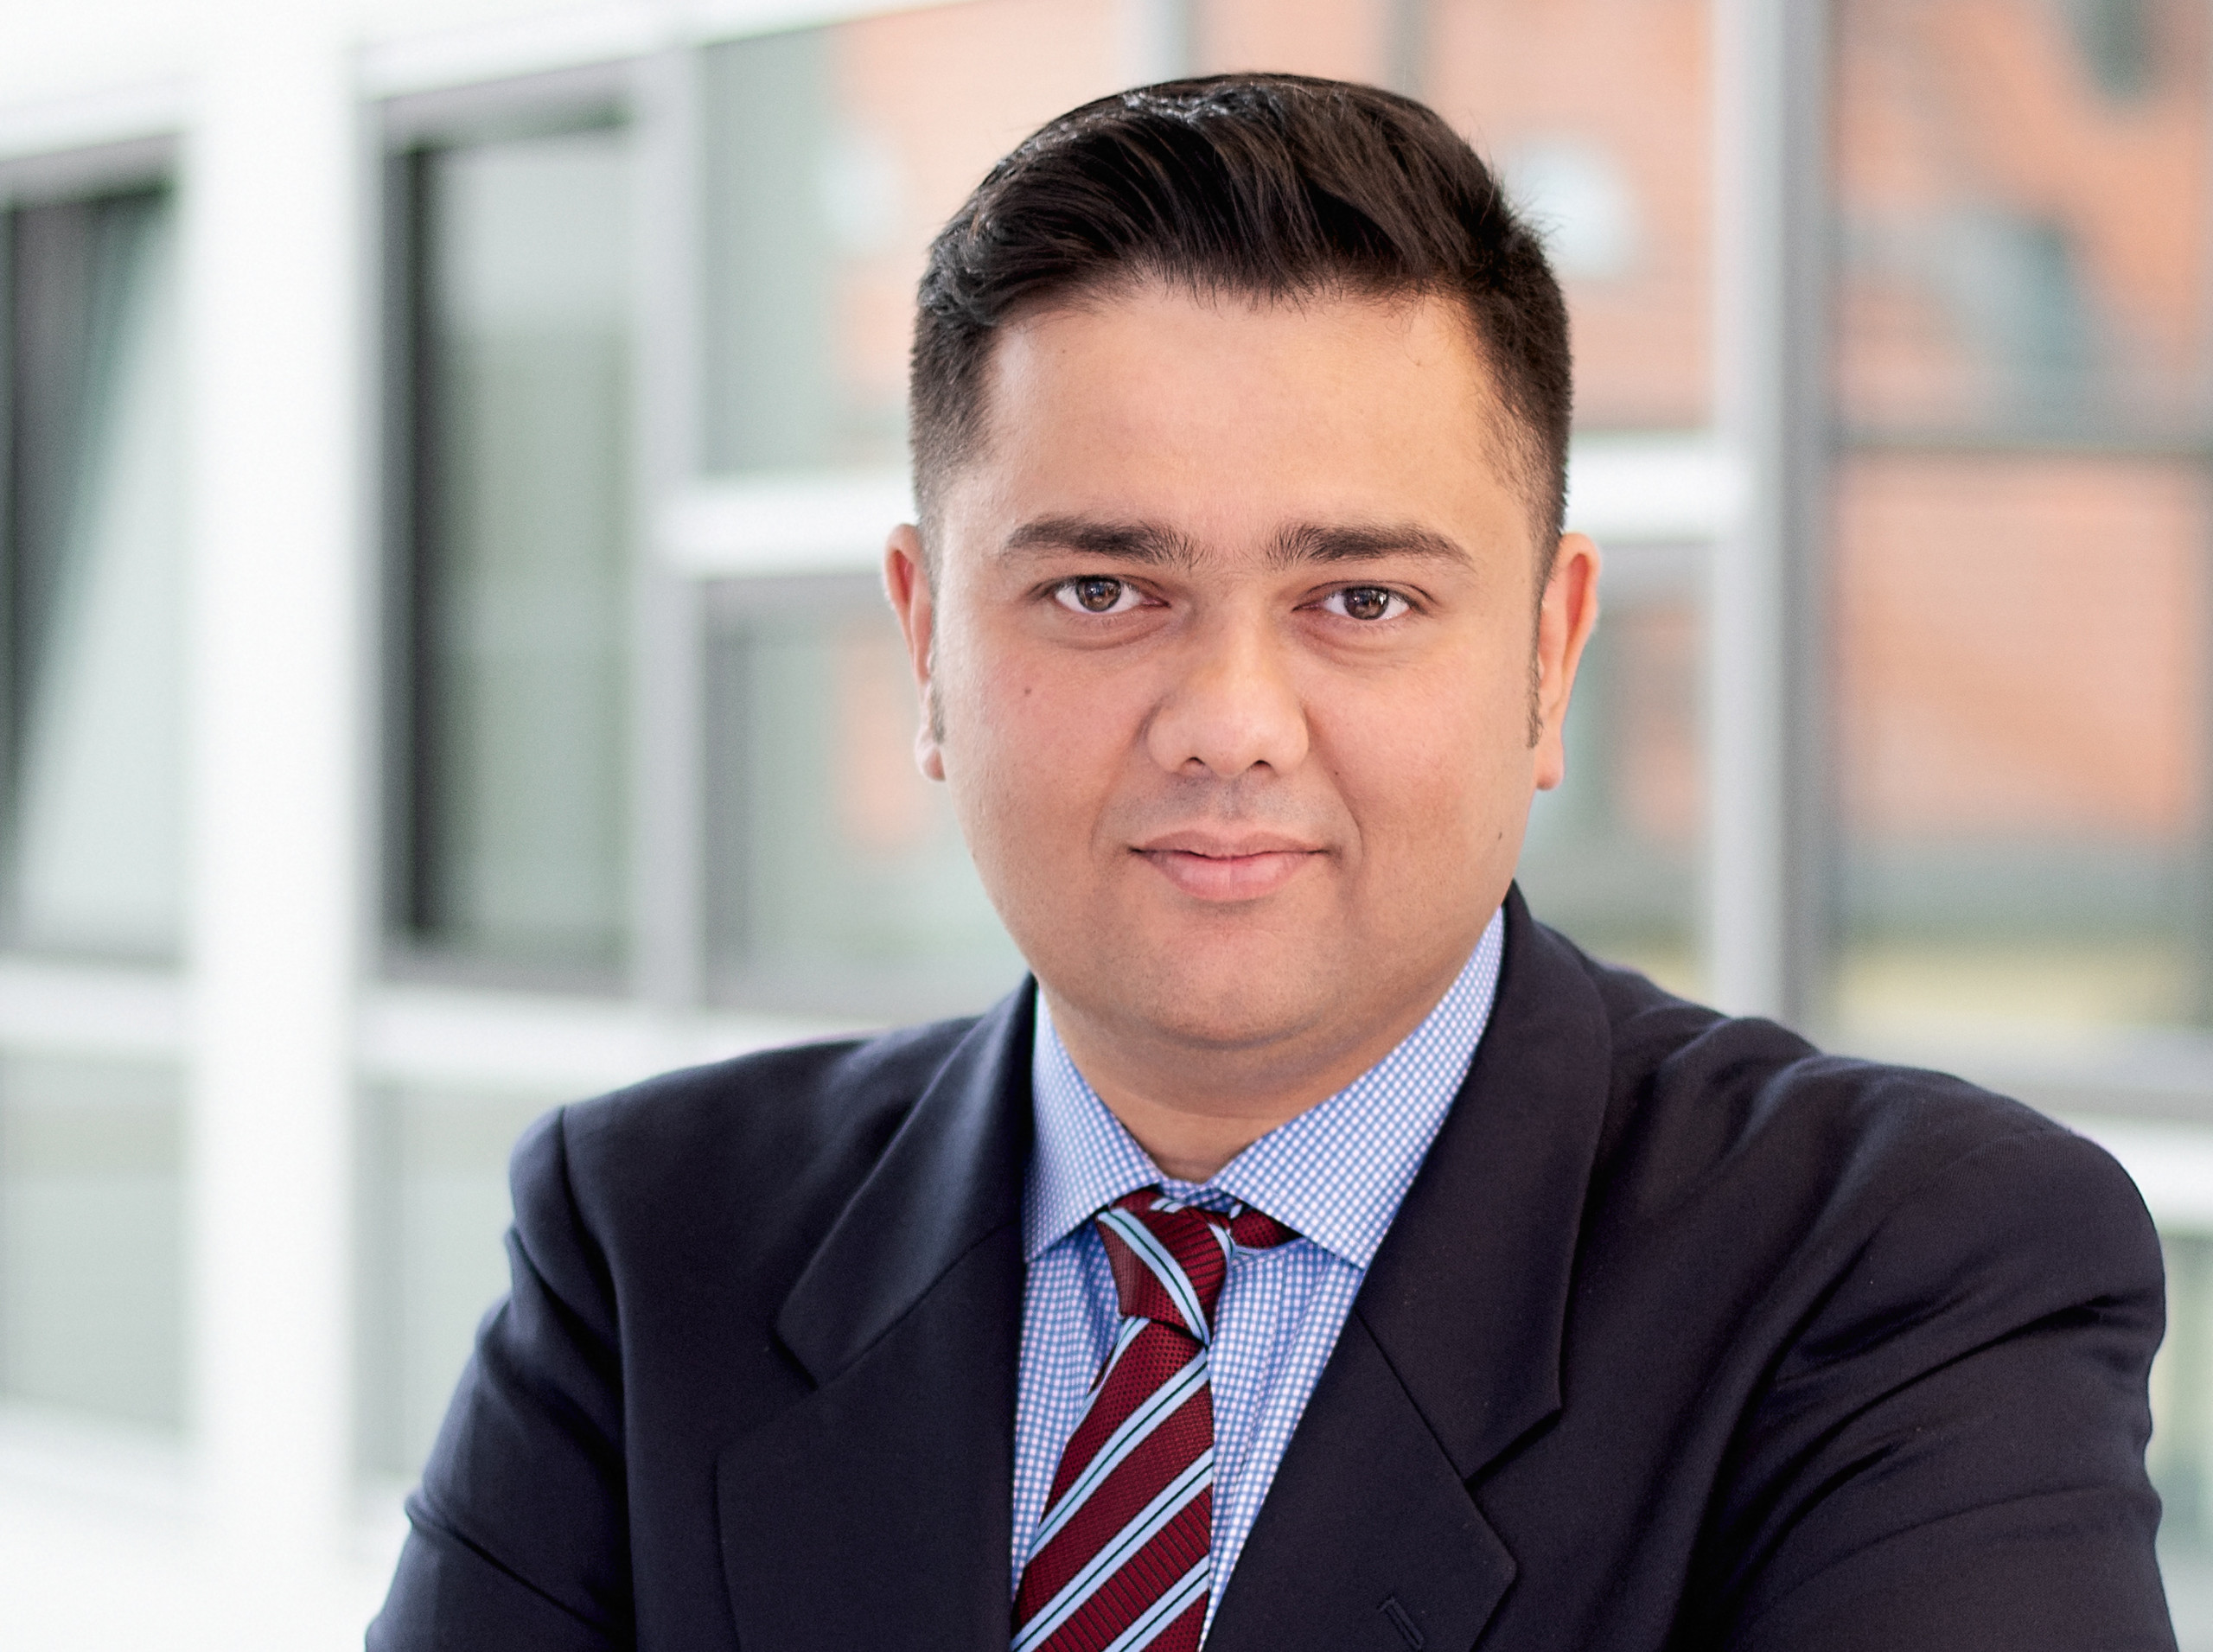 Rushabh Desai, Asia Pacific CEO of Allianz Real Estate